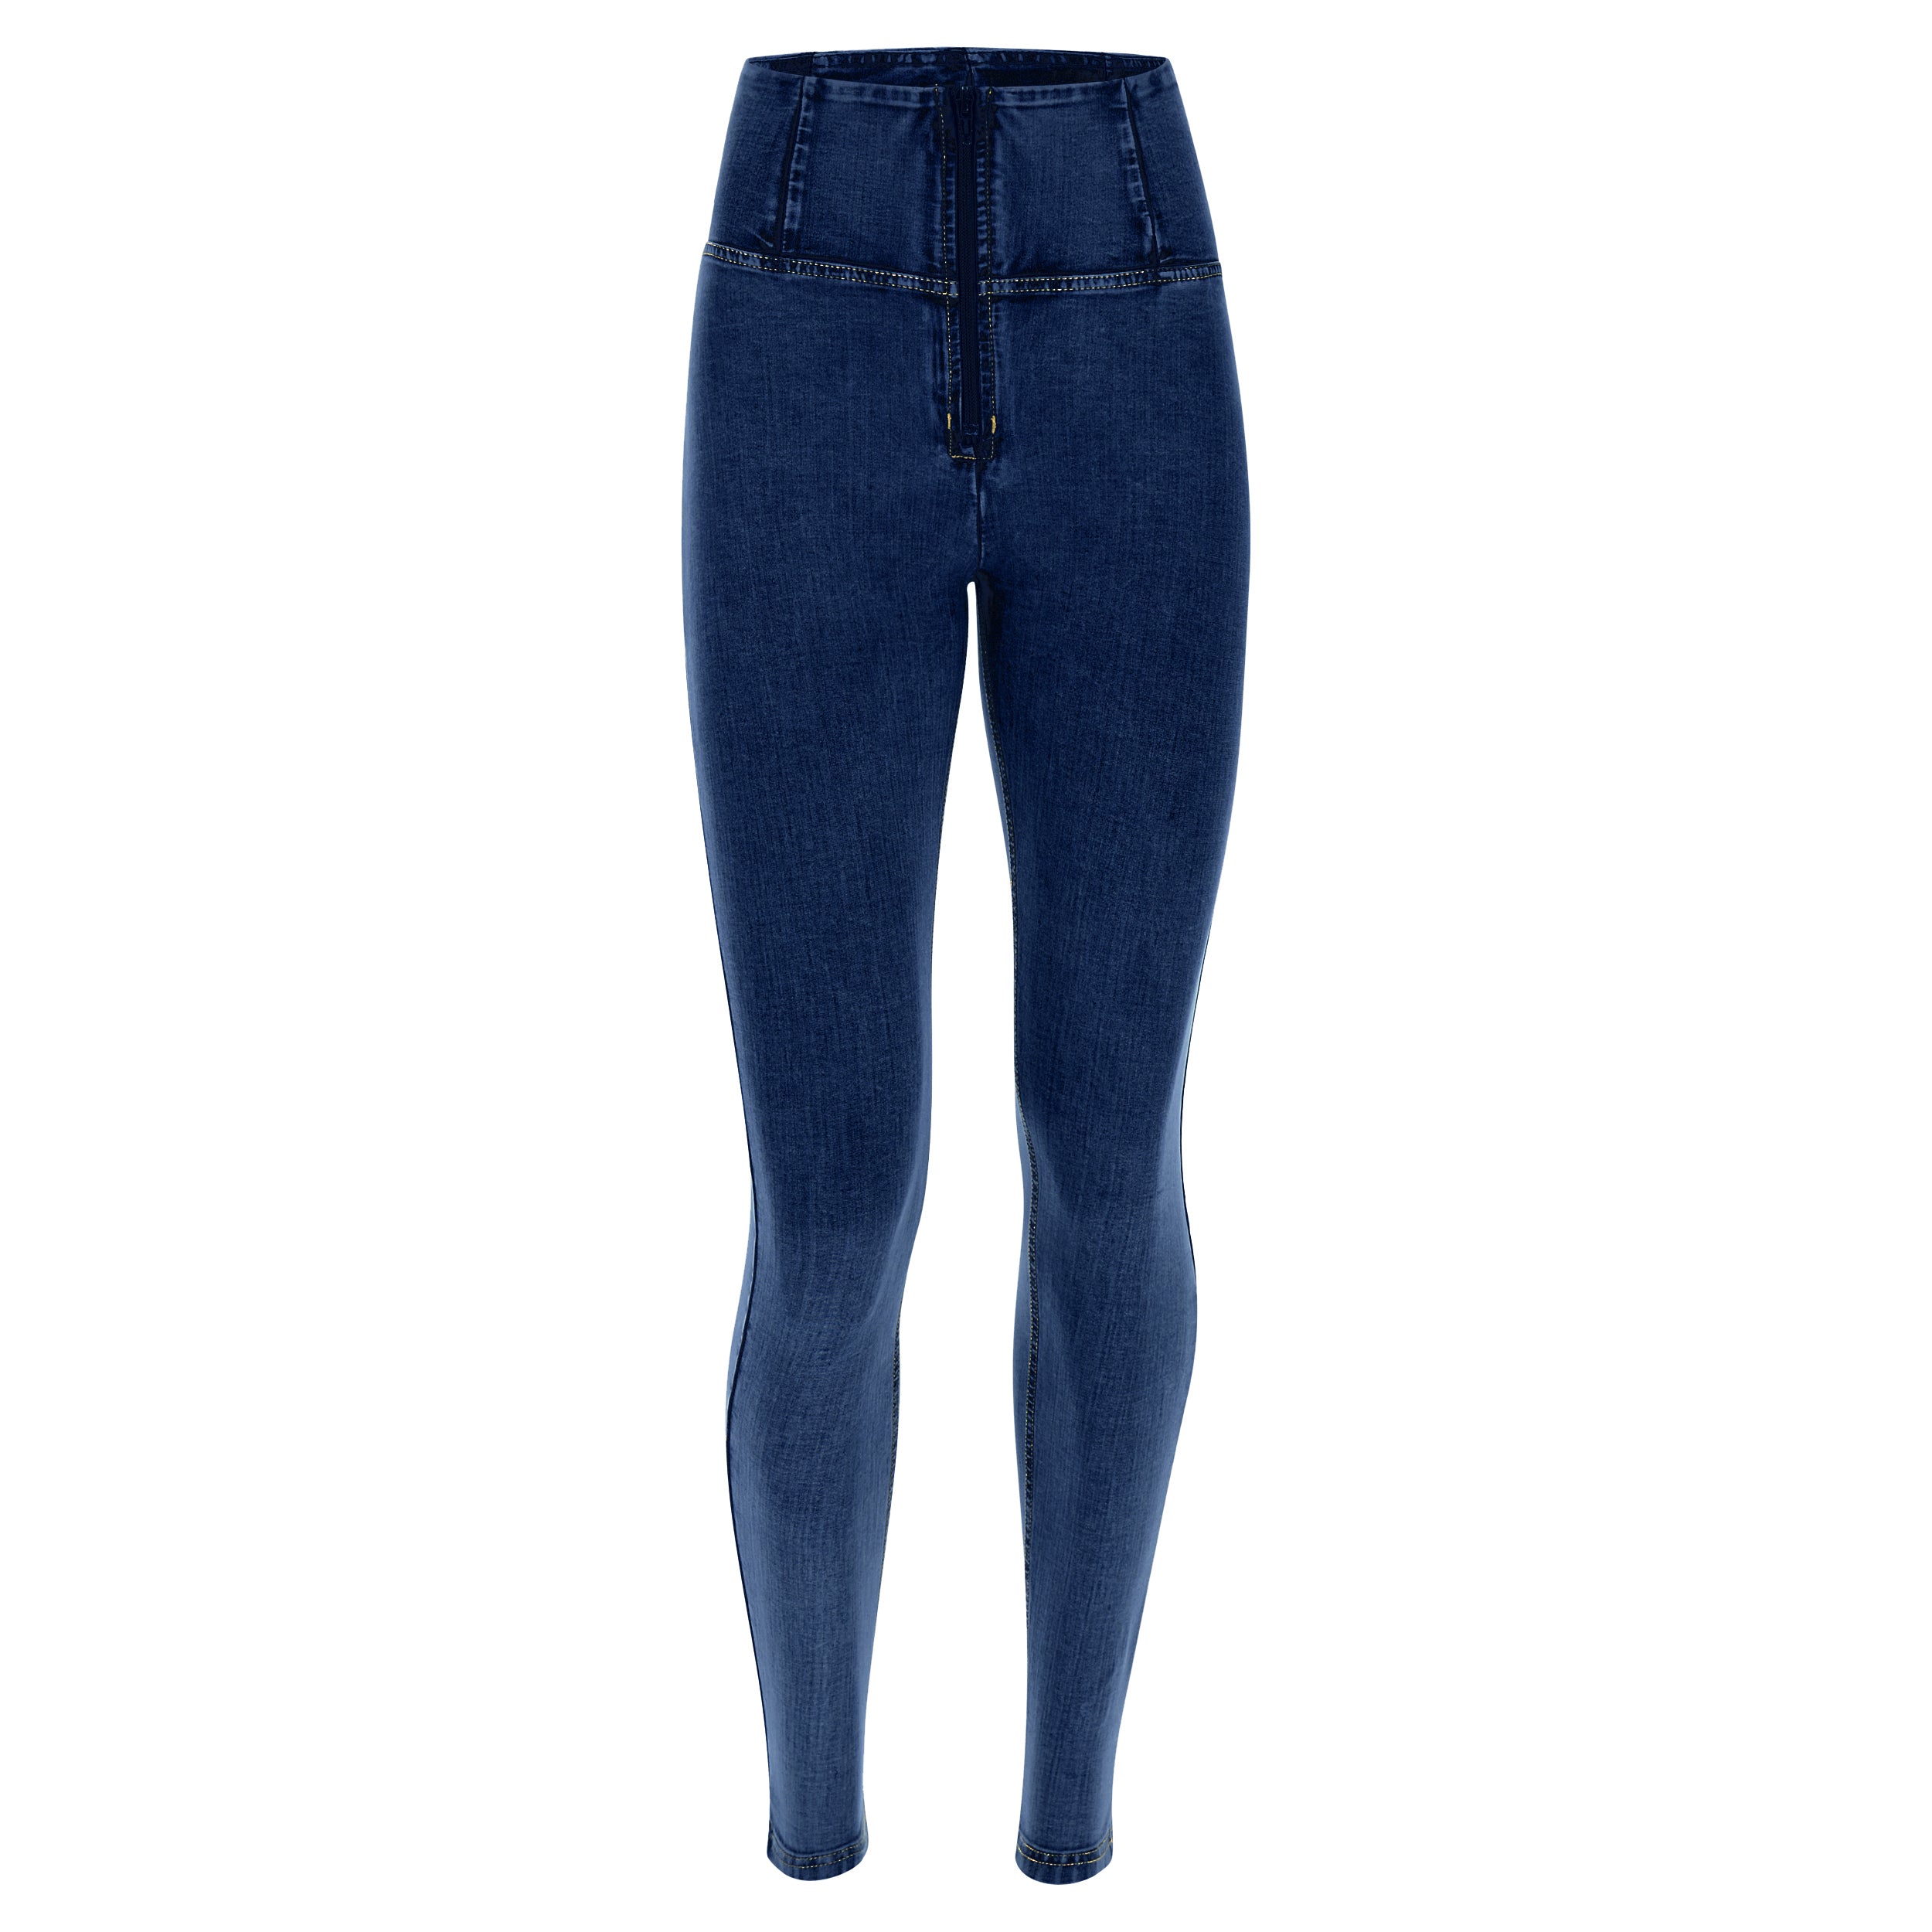 soft tencel denim look shaping freddy shapewear push up comfortable jegging stretch high waist zip donkerblauw blauw dark blue